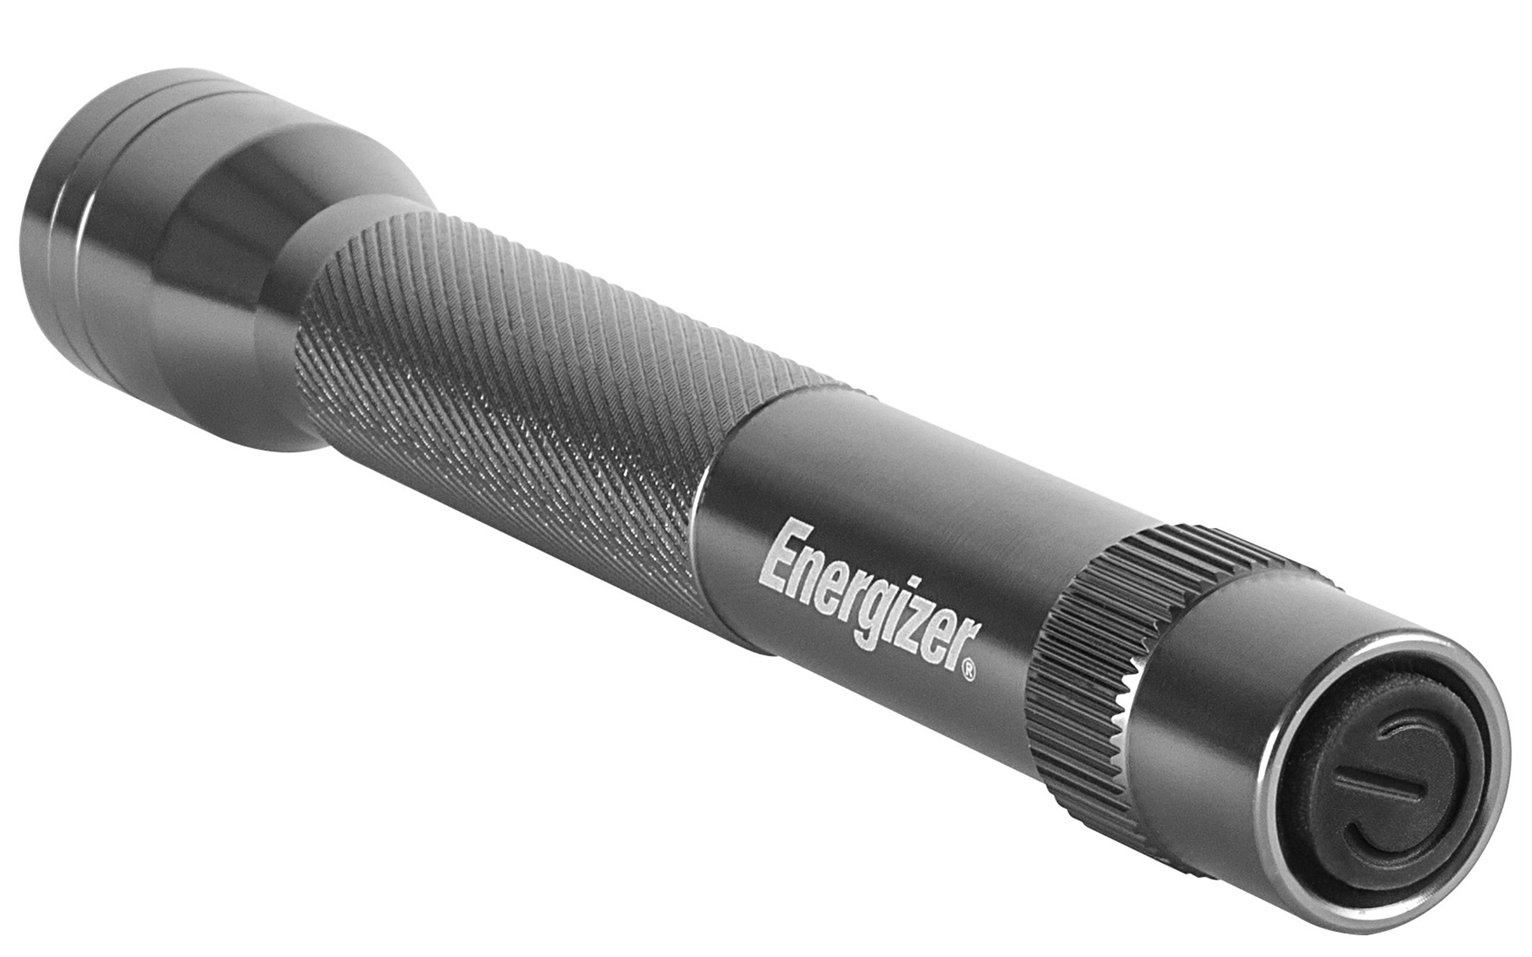 Energizer 60 Lumen Metal LED Torch Review